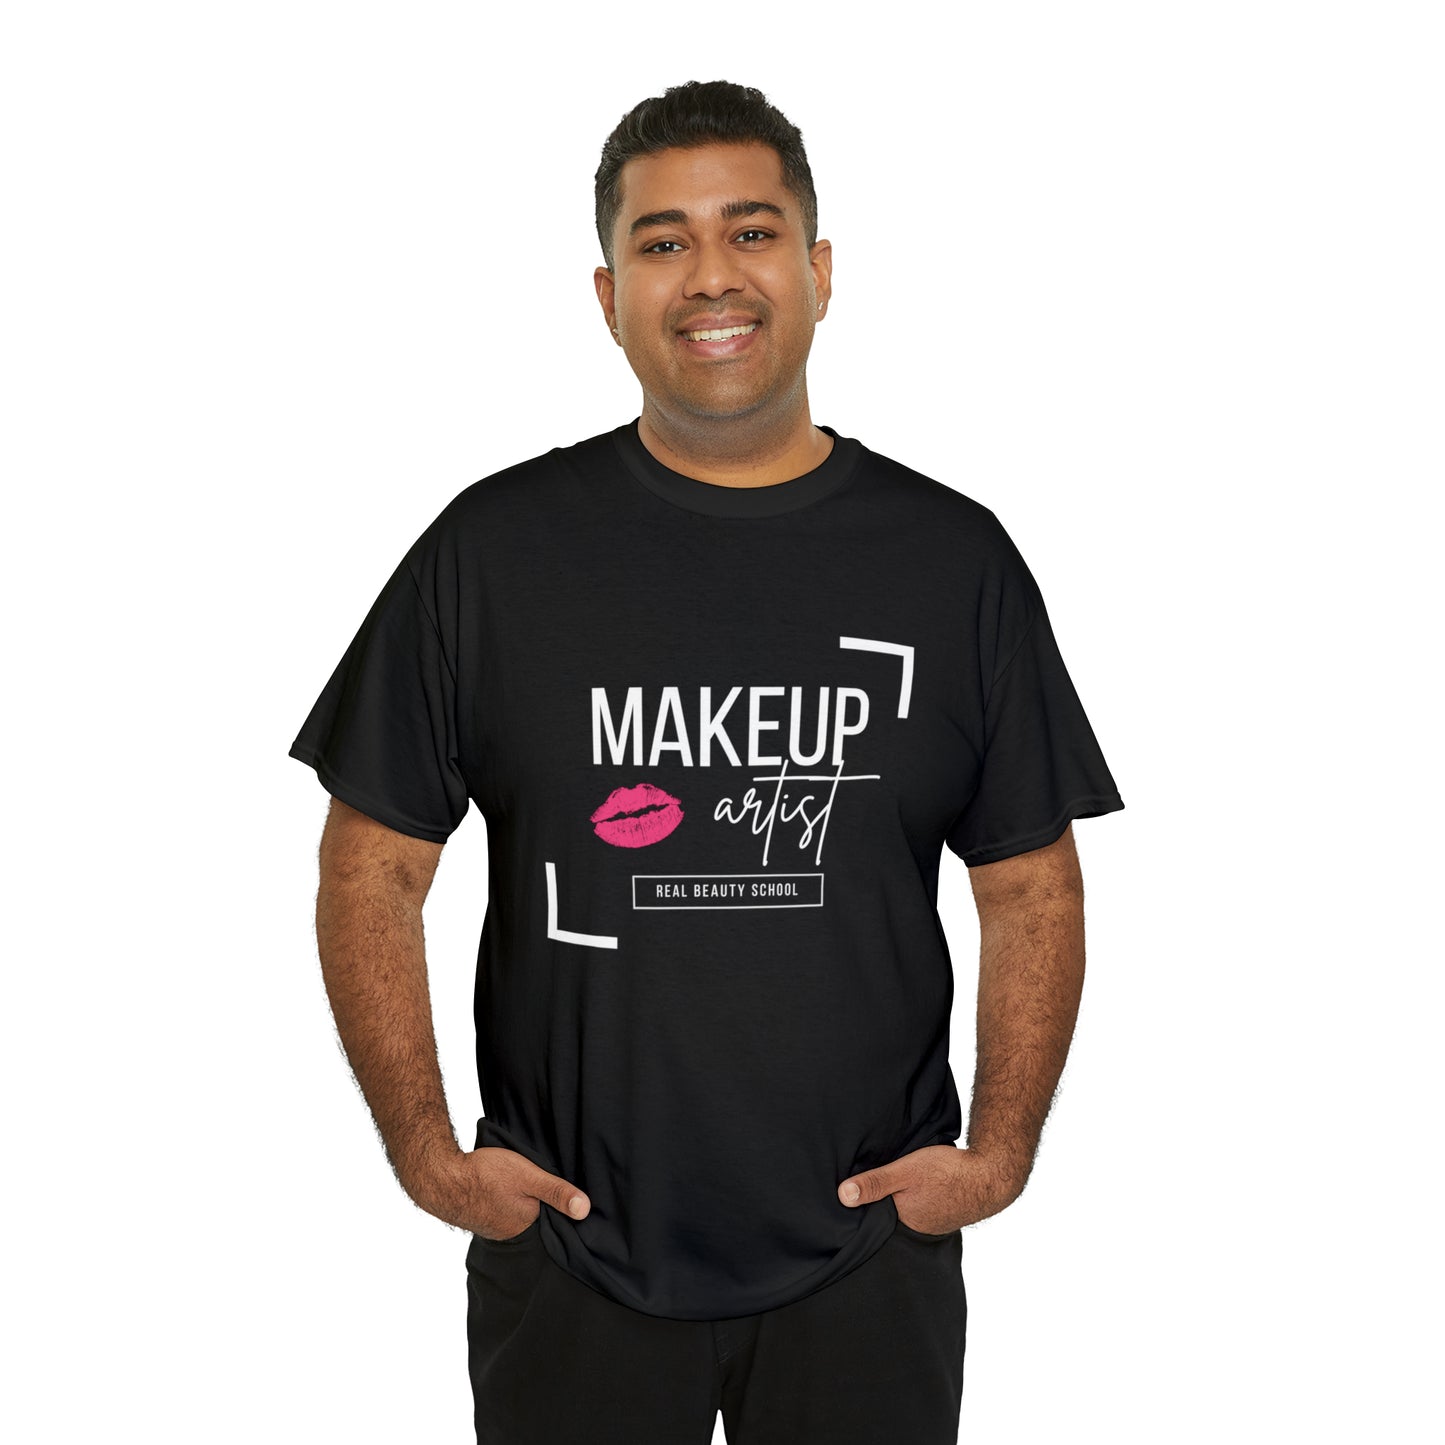 Makeup Artist By Real Beauty School -  Unisex Cotton Tee